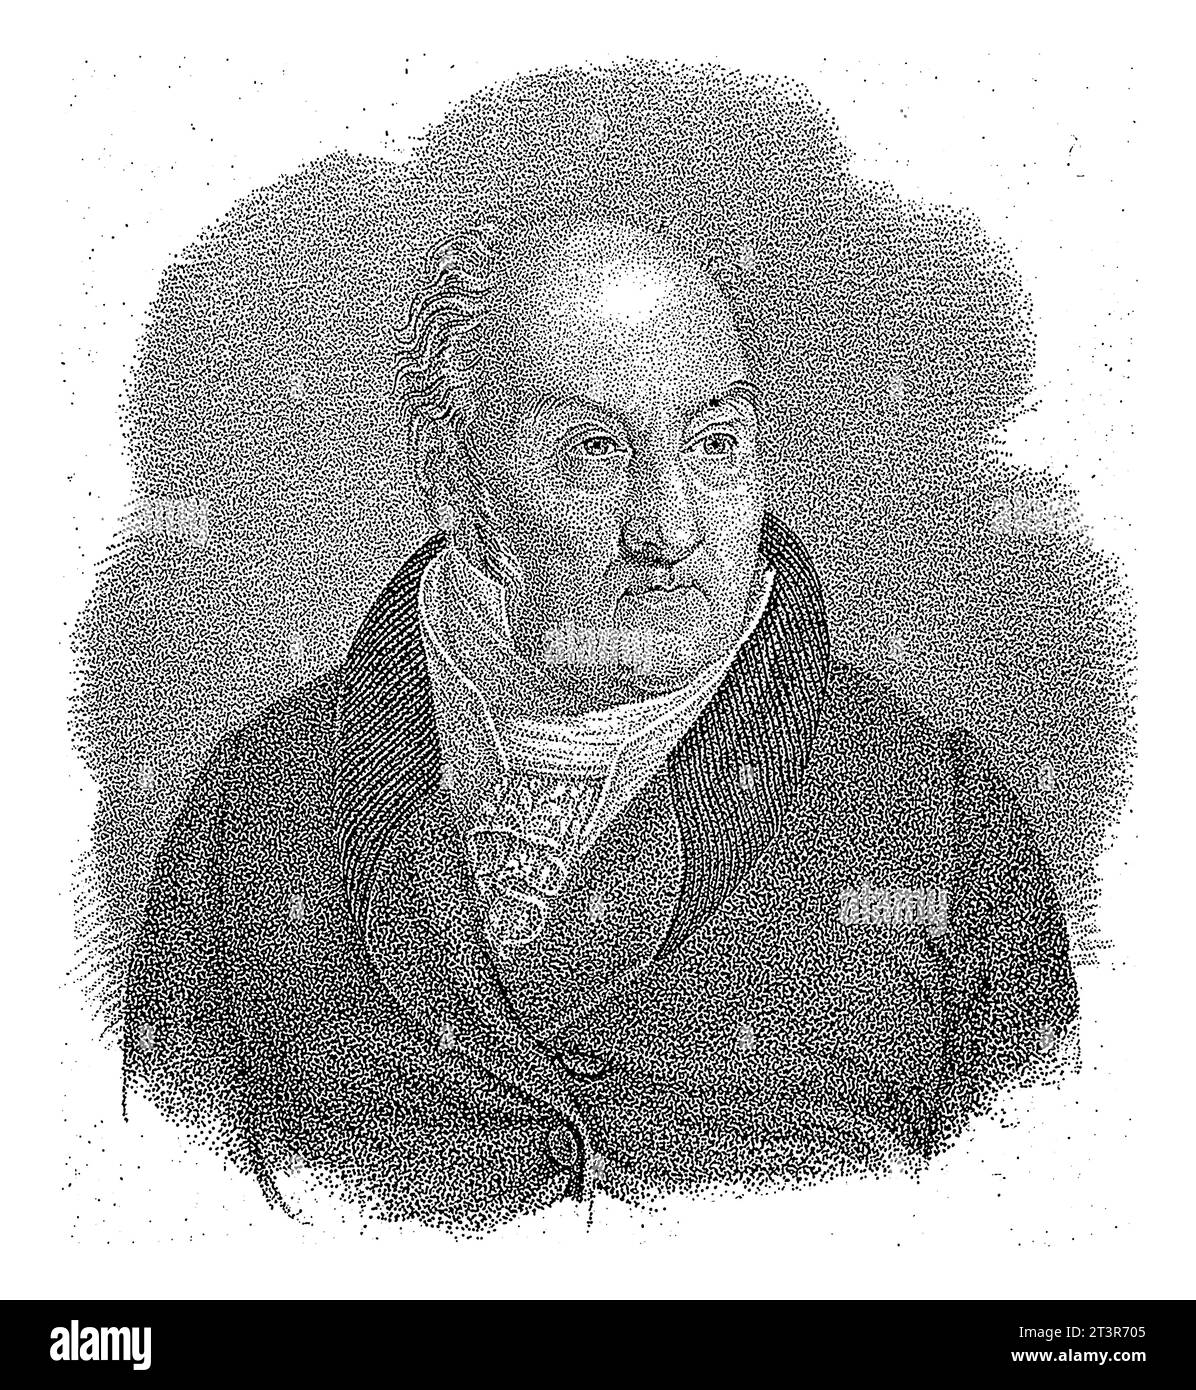 Portrait of Jurist and Philosopher Gian Domenico Romagnosi, Giuseppe Cornienti, 1800 - 1850, vintage engraved. Stock Photo